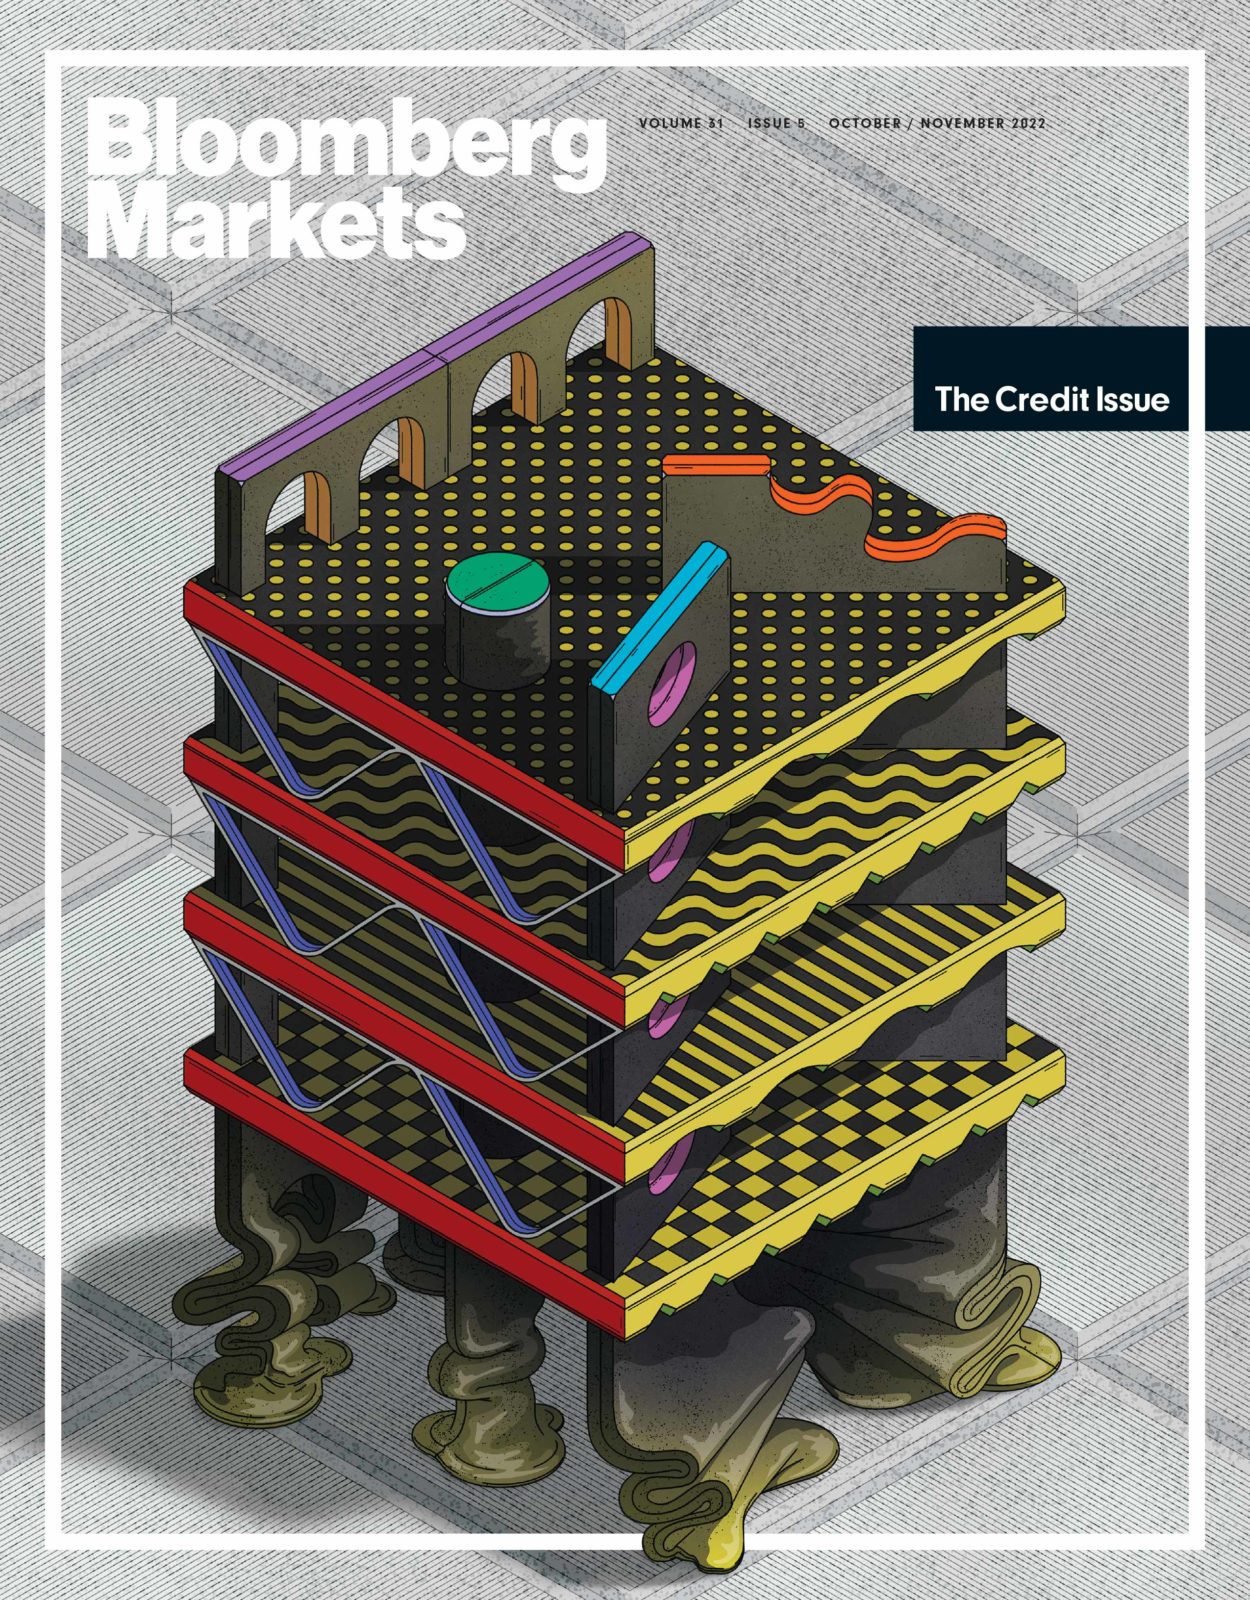 Bloomberg markets poster by Carolina Moscoso